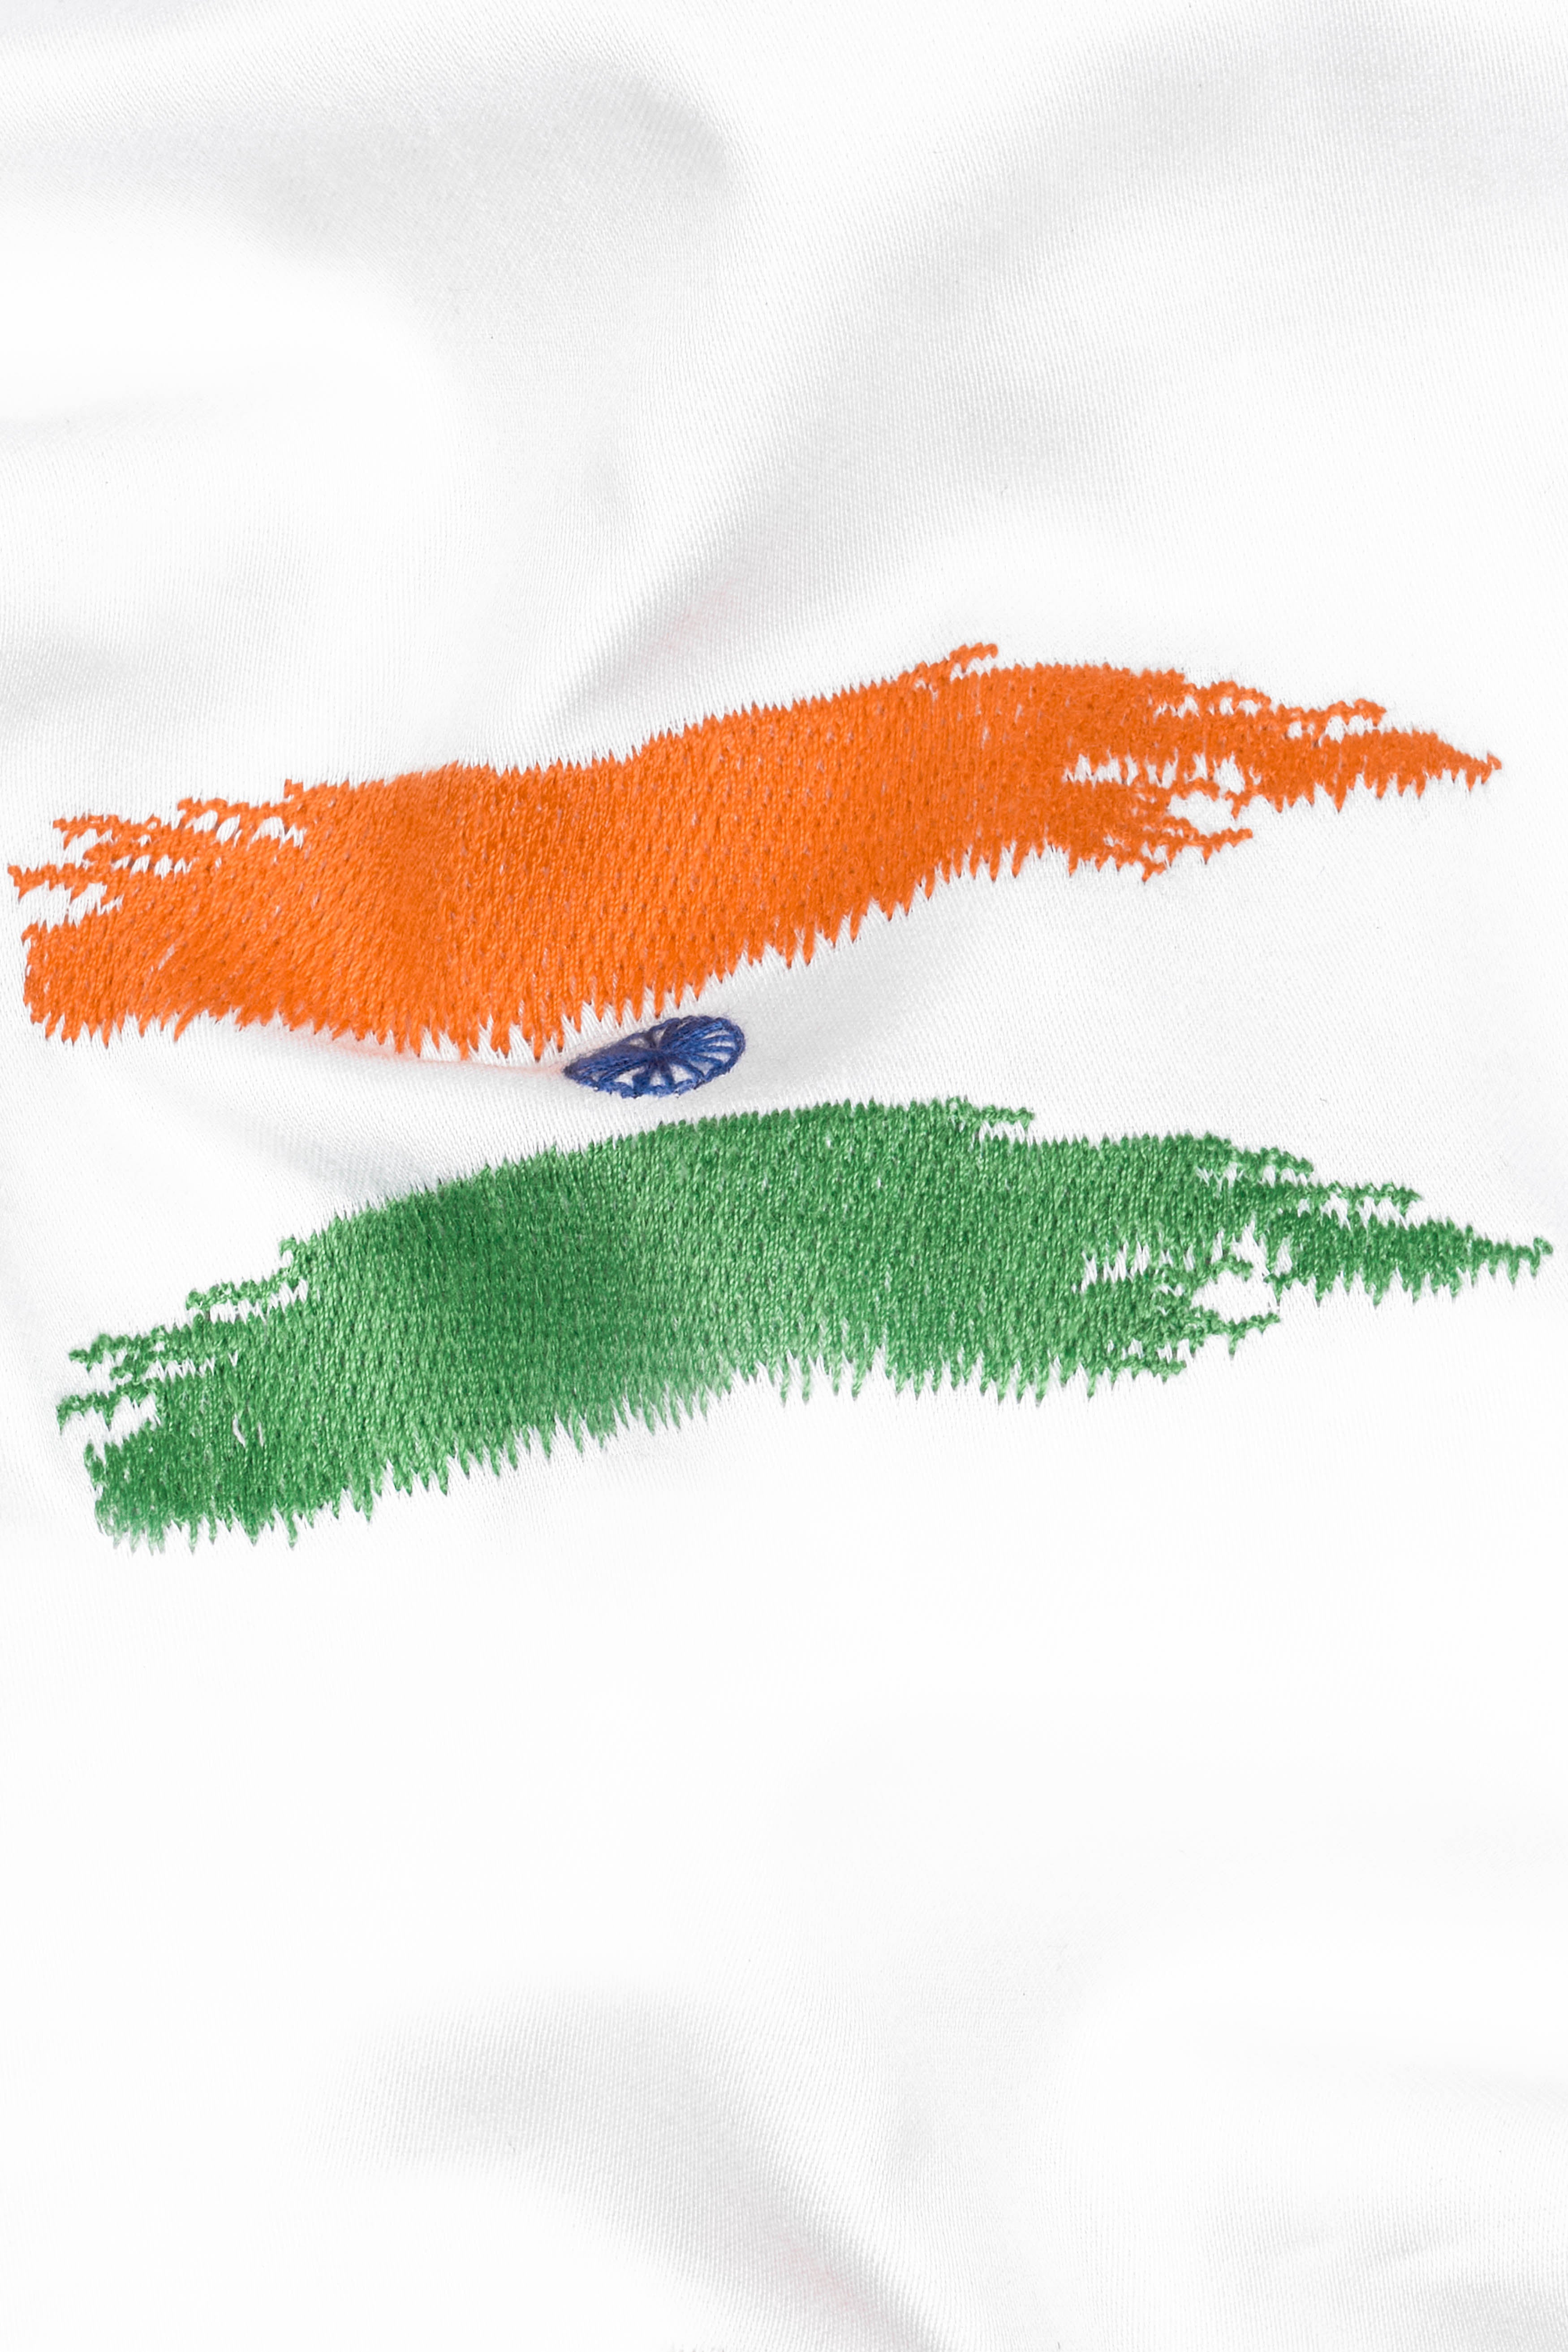 Bright White Indian Flag Embroidered Premium Cotton Designer Shirt